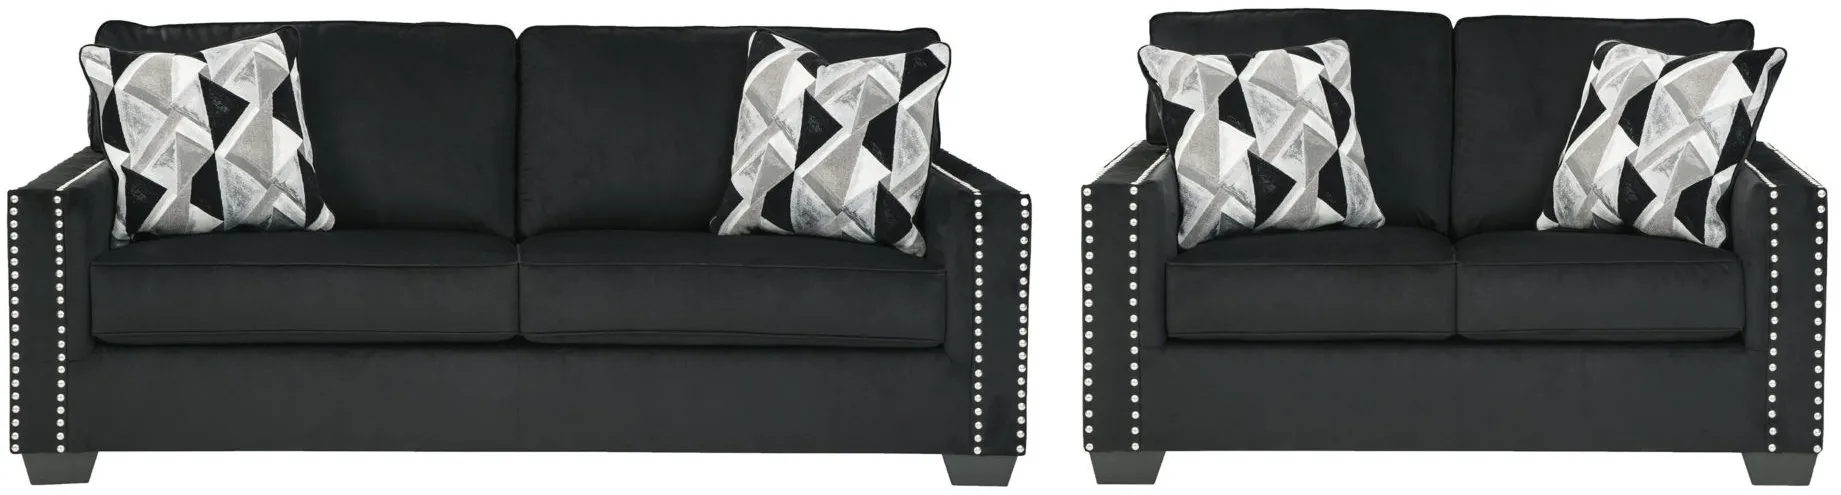 Gleston Sofa and Loveseat Set in Onyx by Ashley Furniture